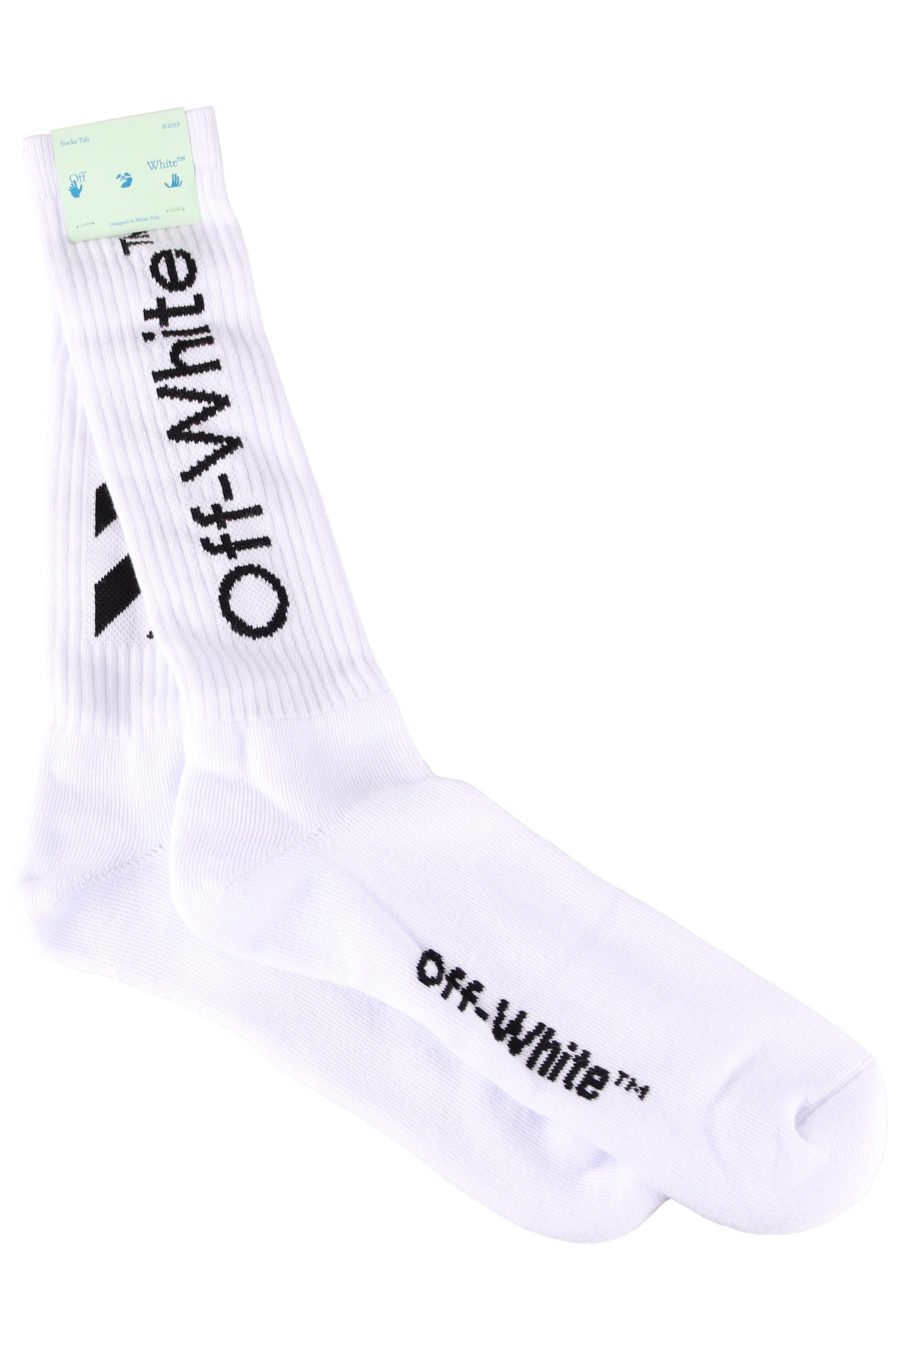 Socks Off-White white with black stripes - bfc43a53f0db61a19713258f09c9d6598d19f896